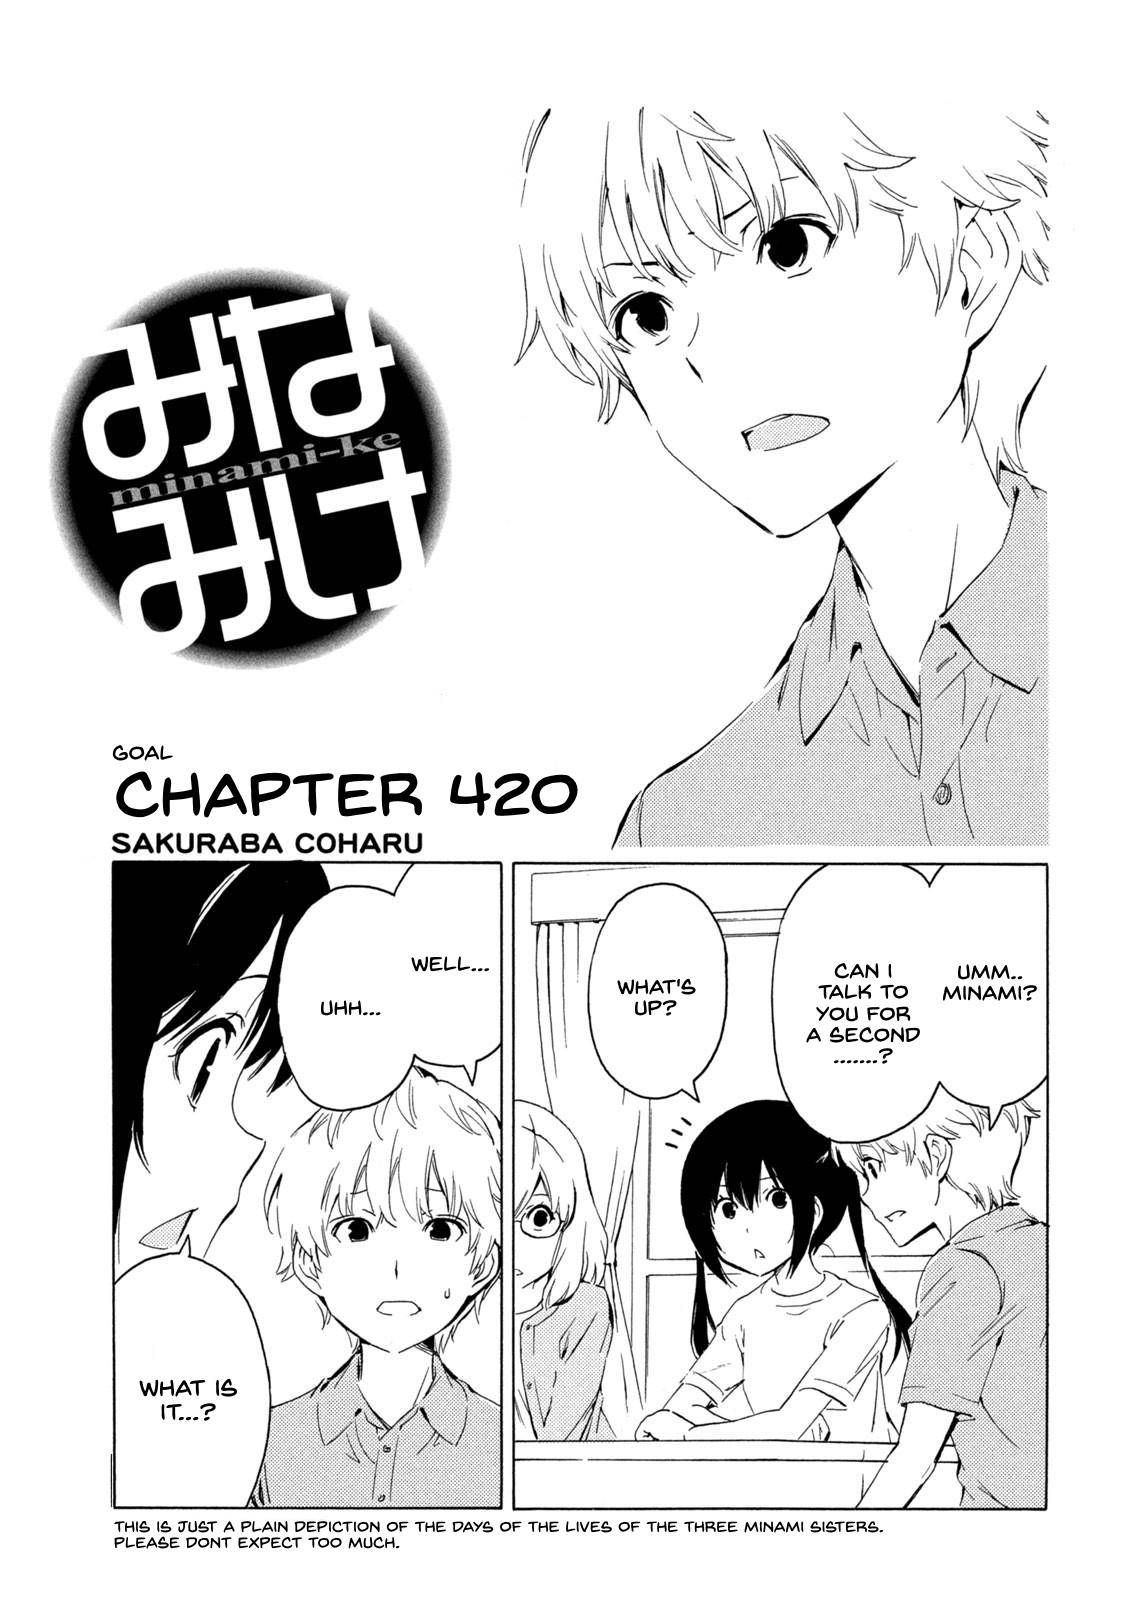 Minami-ke chapter 420 page 1